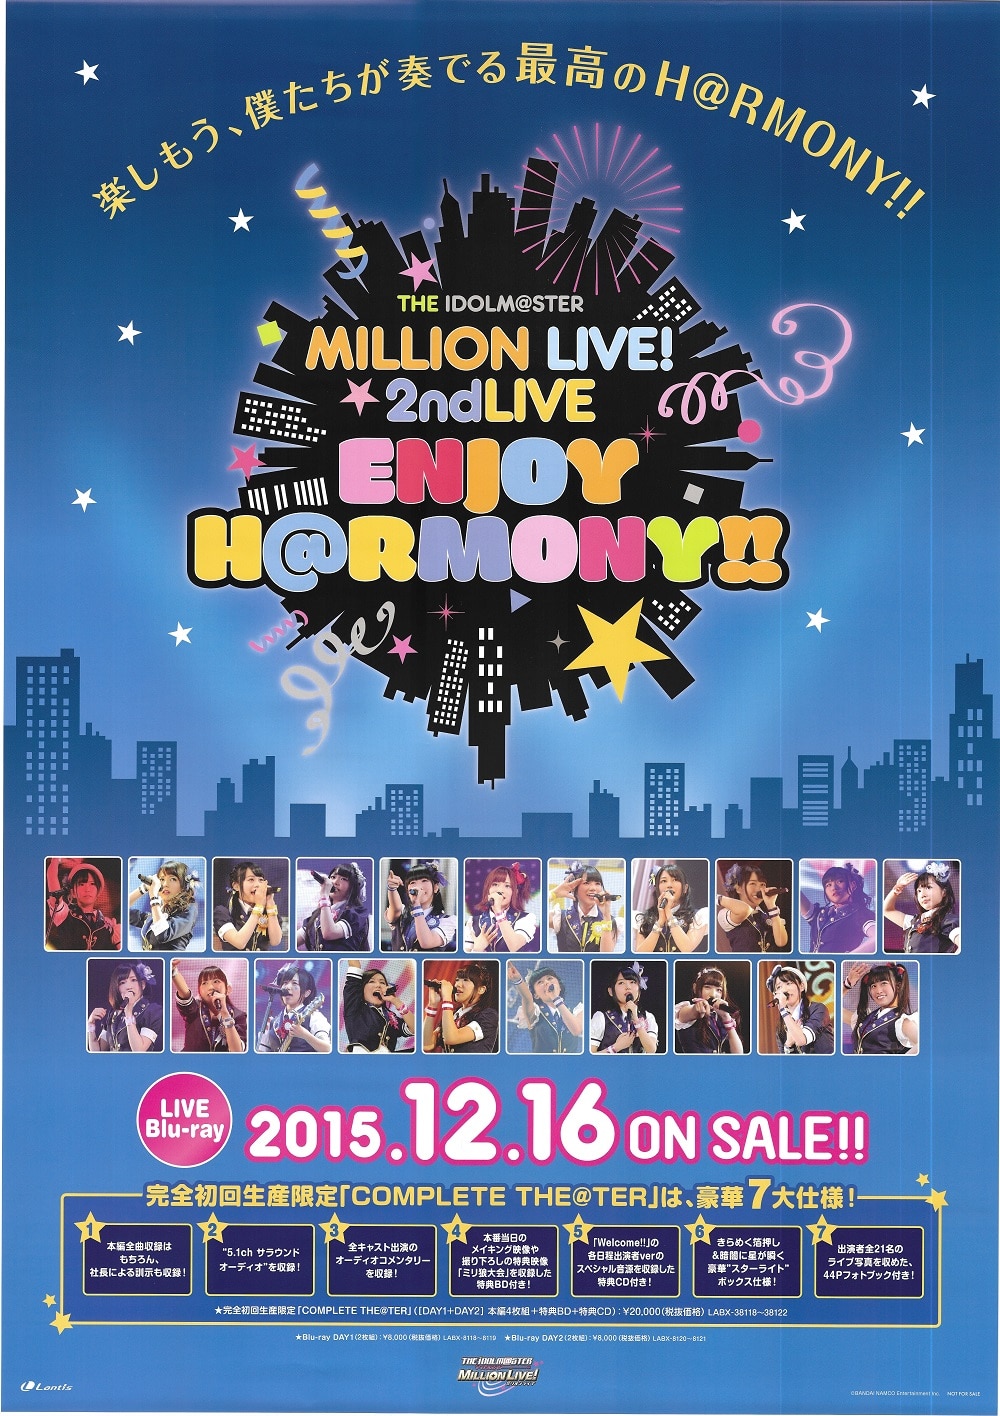 2nd LIVE ENJOY H@RMONY!! THE IDOLM@STER MILLION LIVE! 販促ポスター ...